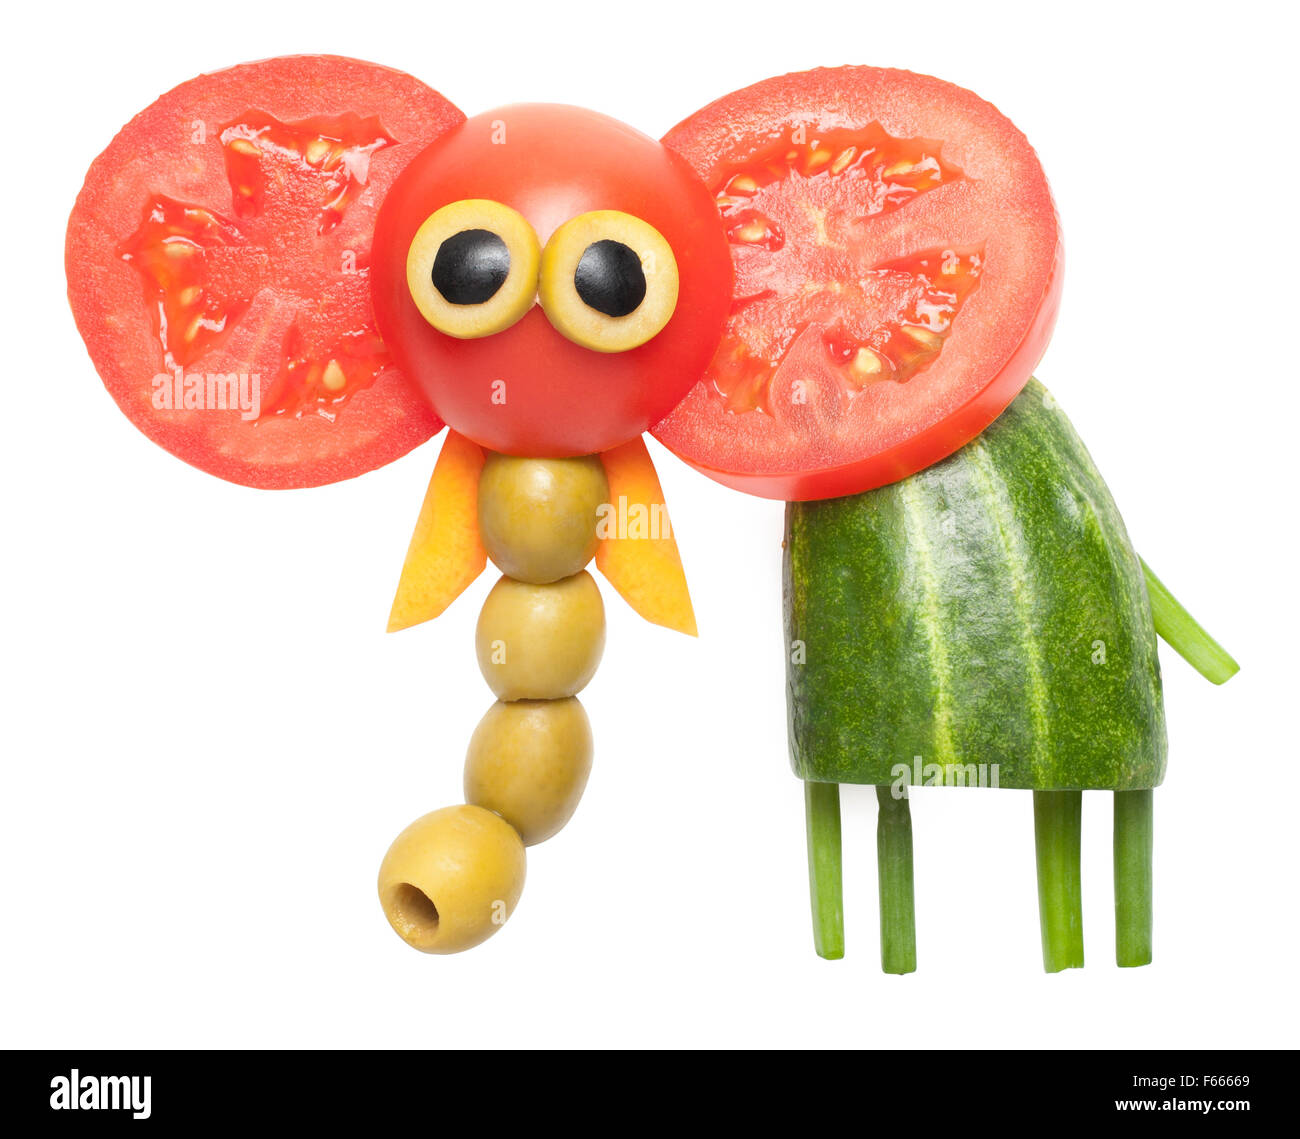 Elephant made of vegetables Stock Photo - Alamy